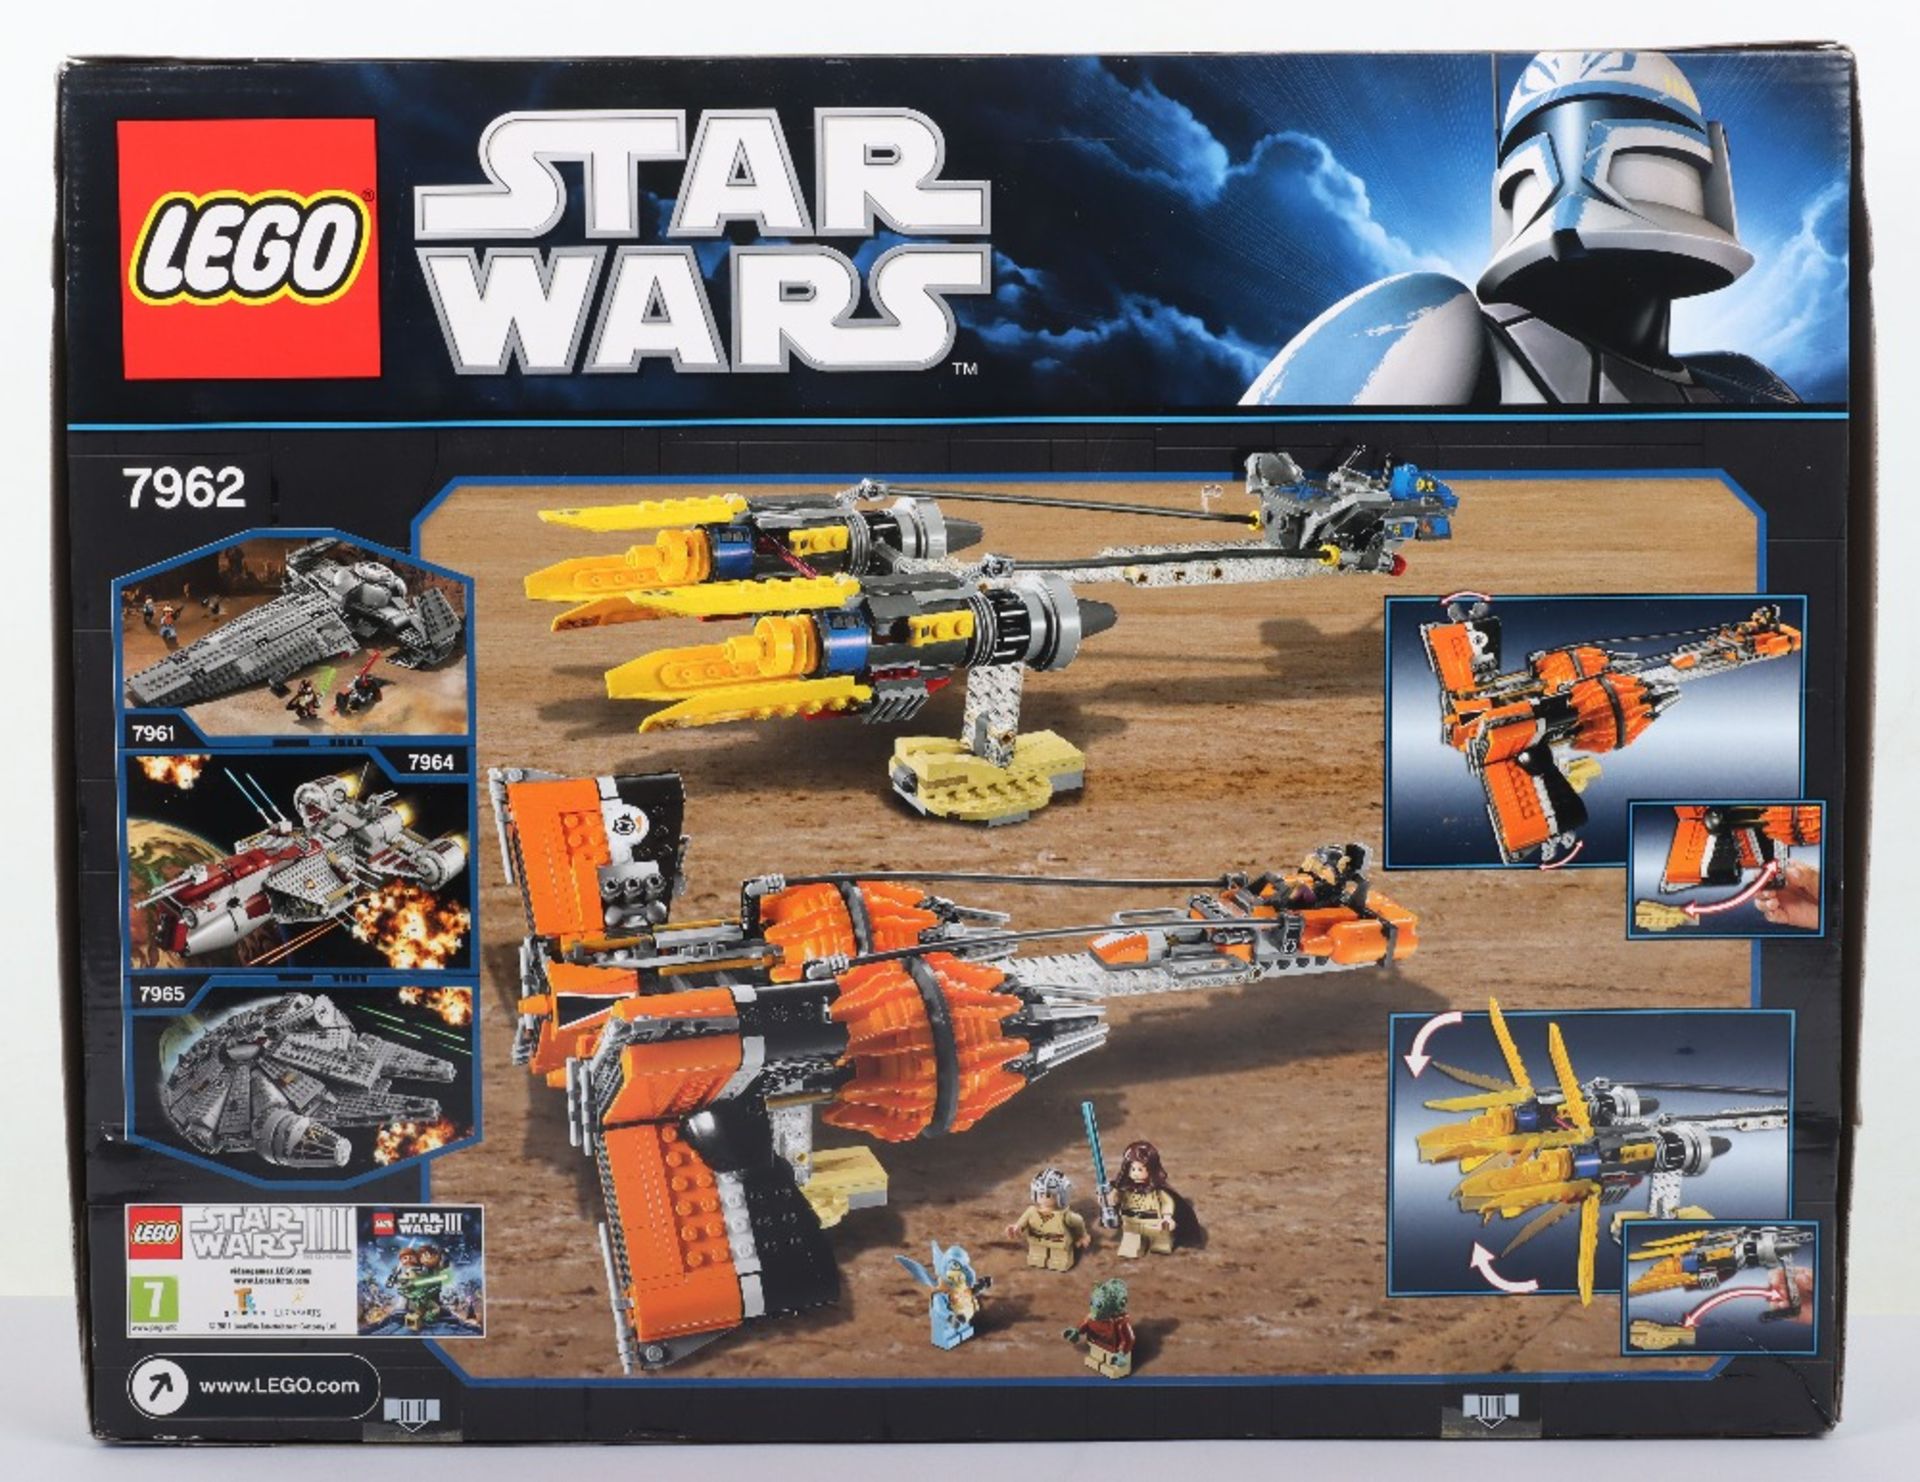 Lego Star Wars 7962 Anakin’s & Sebulba’s Prodracers boxed - Image 2 of 7